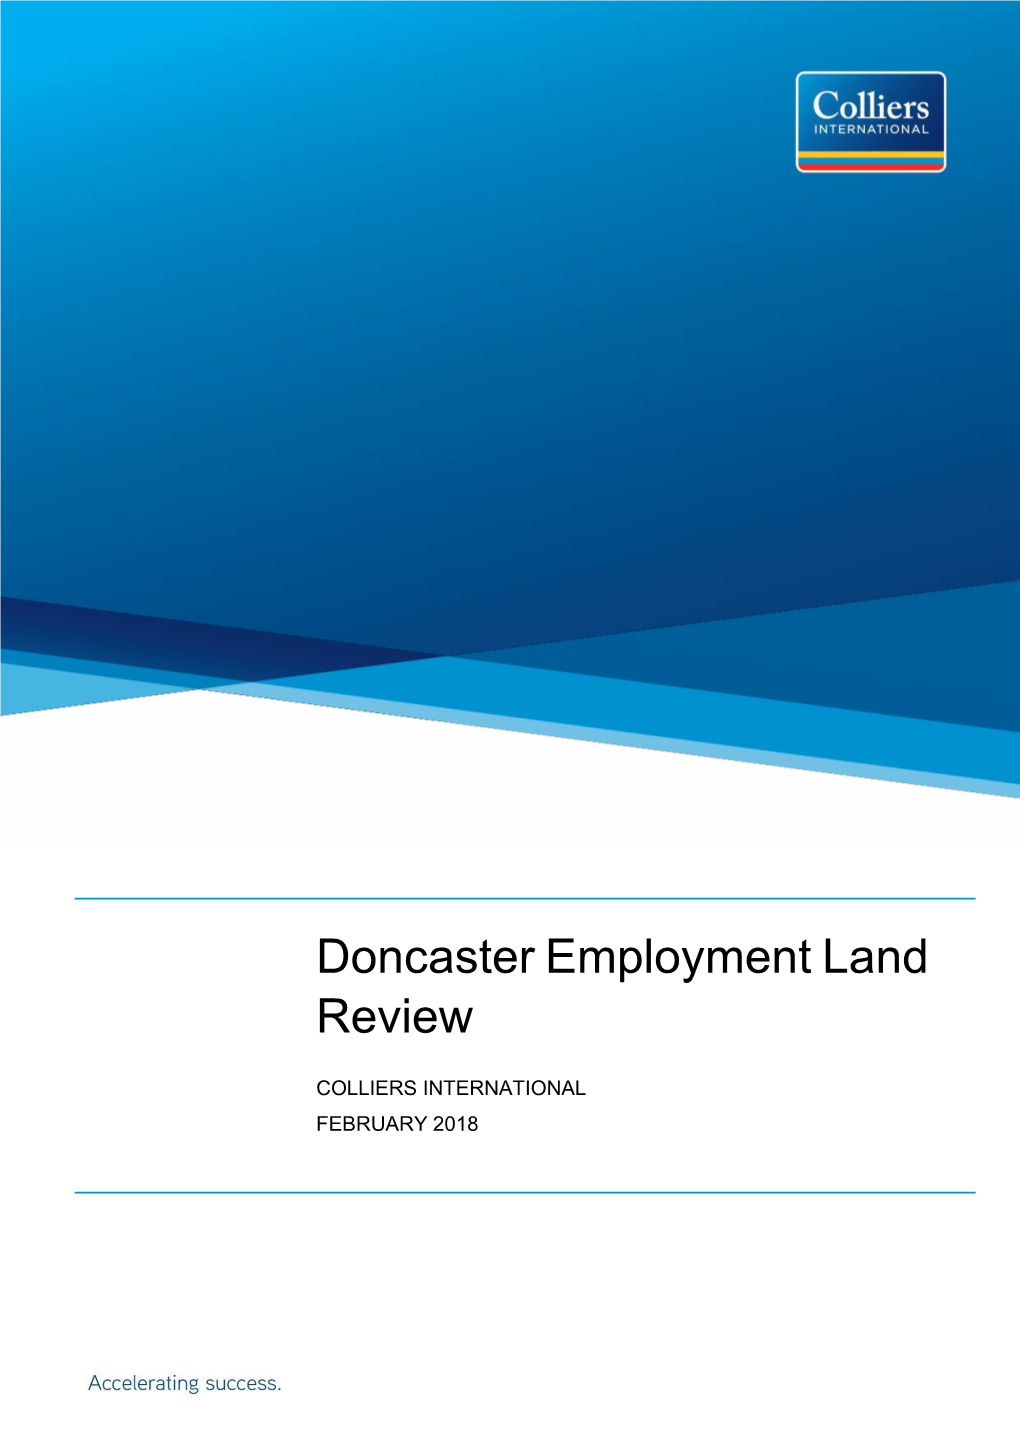 Doncaster Employment Land Review